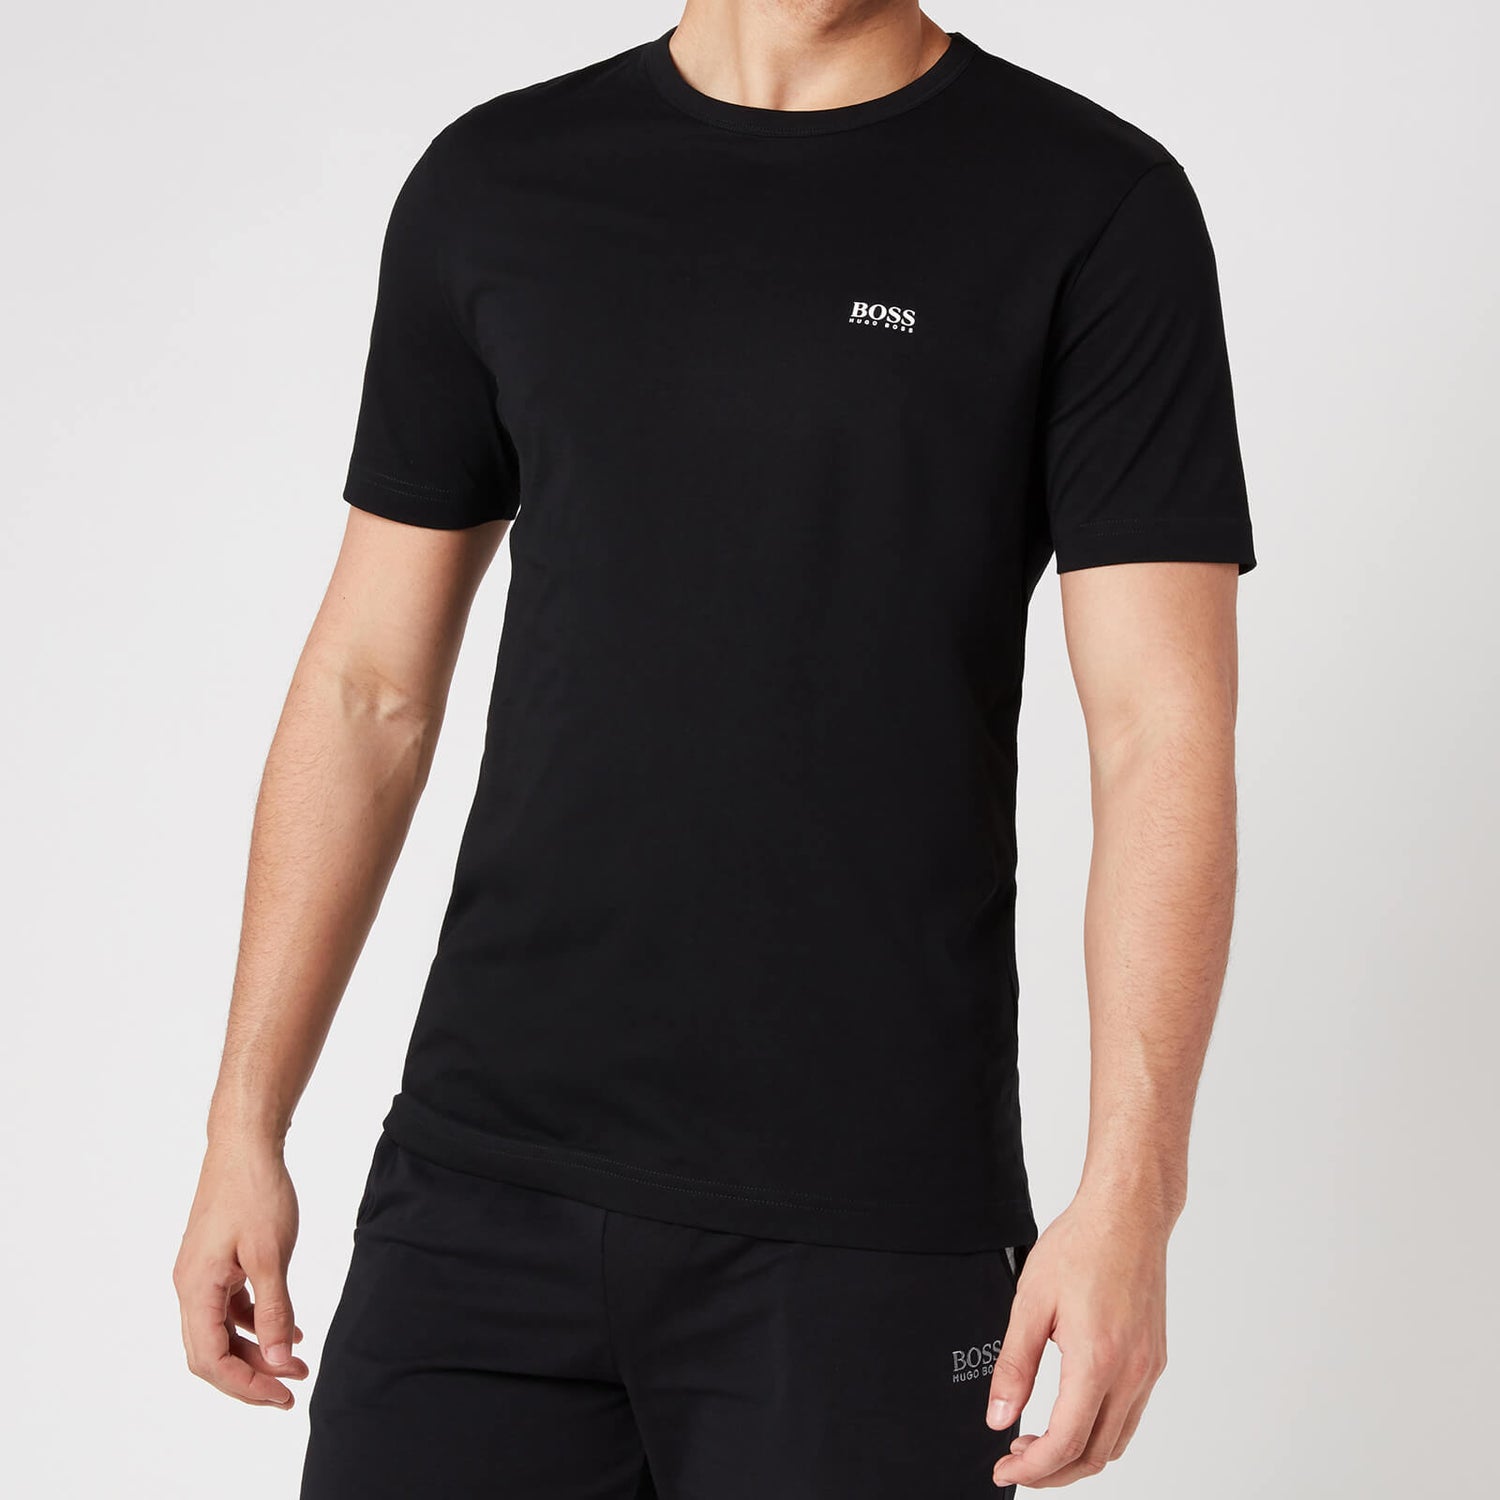 BOSS Athleisure Men's Tee 01 T-Shirt - Black